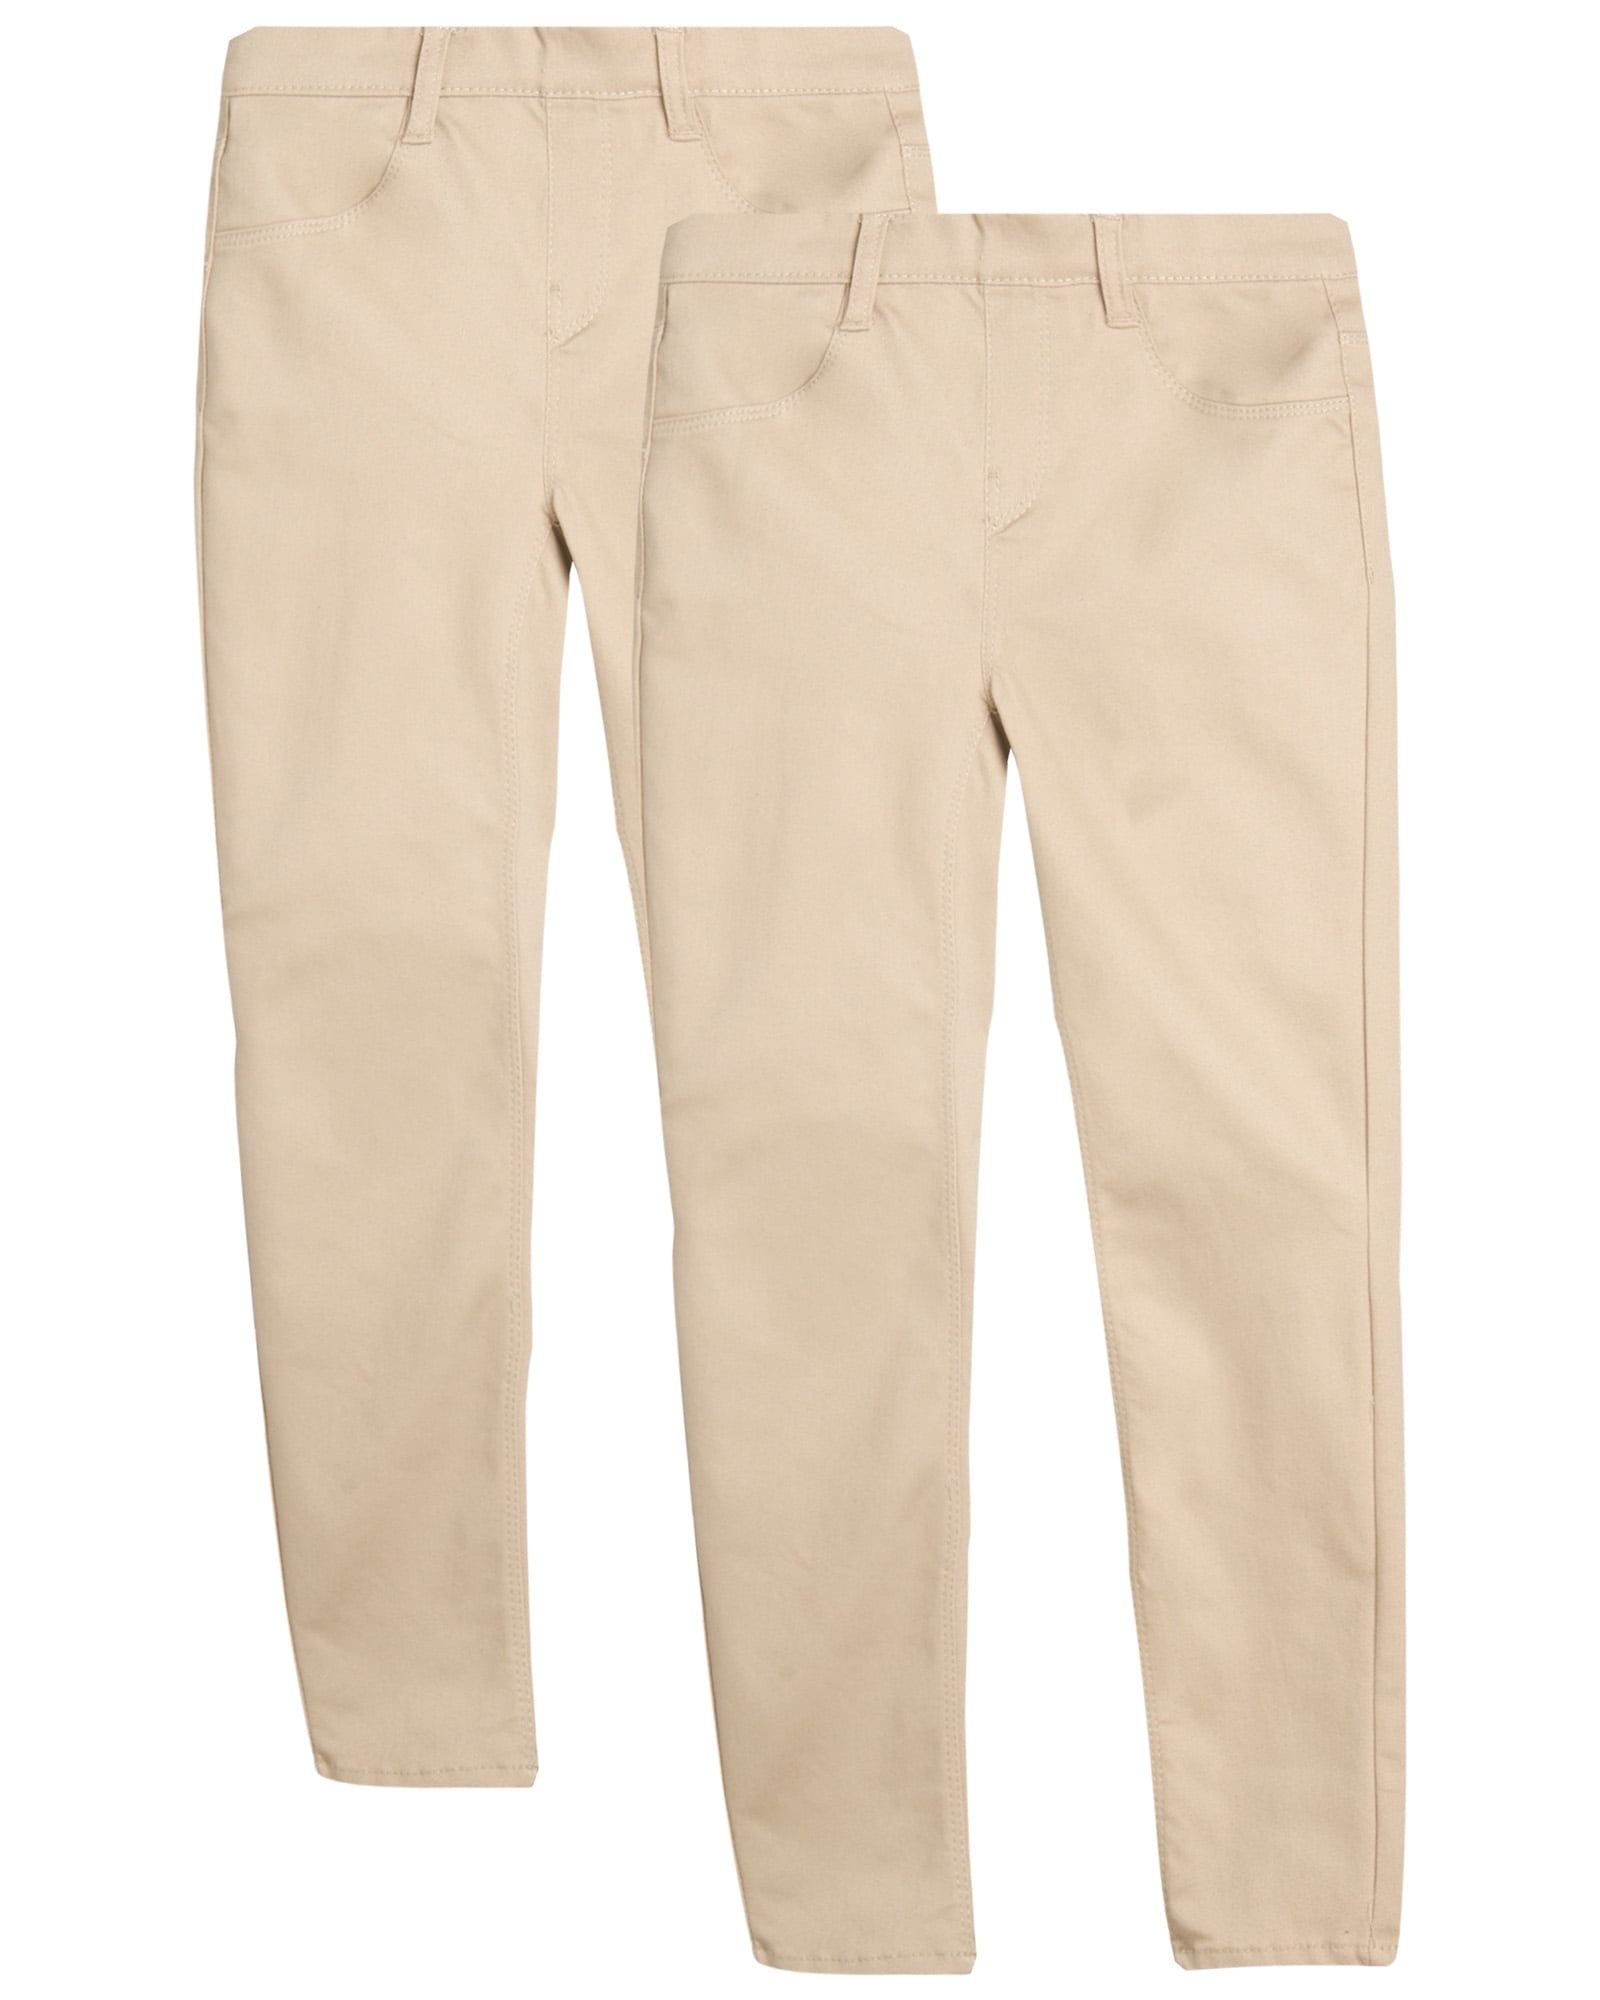 Beverly Hills Polo Club Girls' School Uniform Pants - 2 Pack